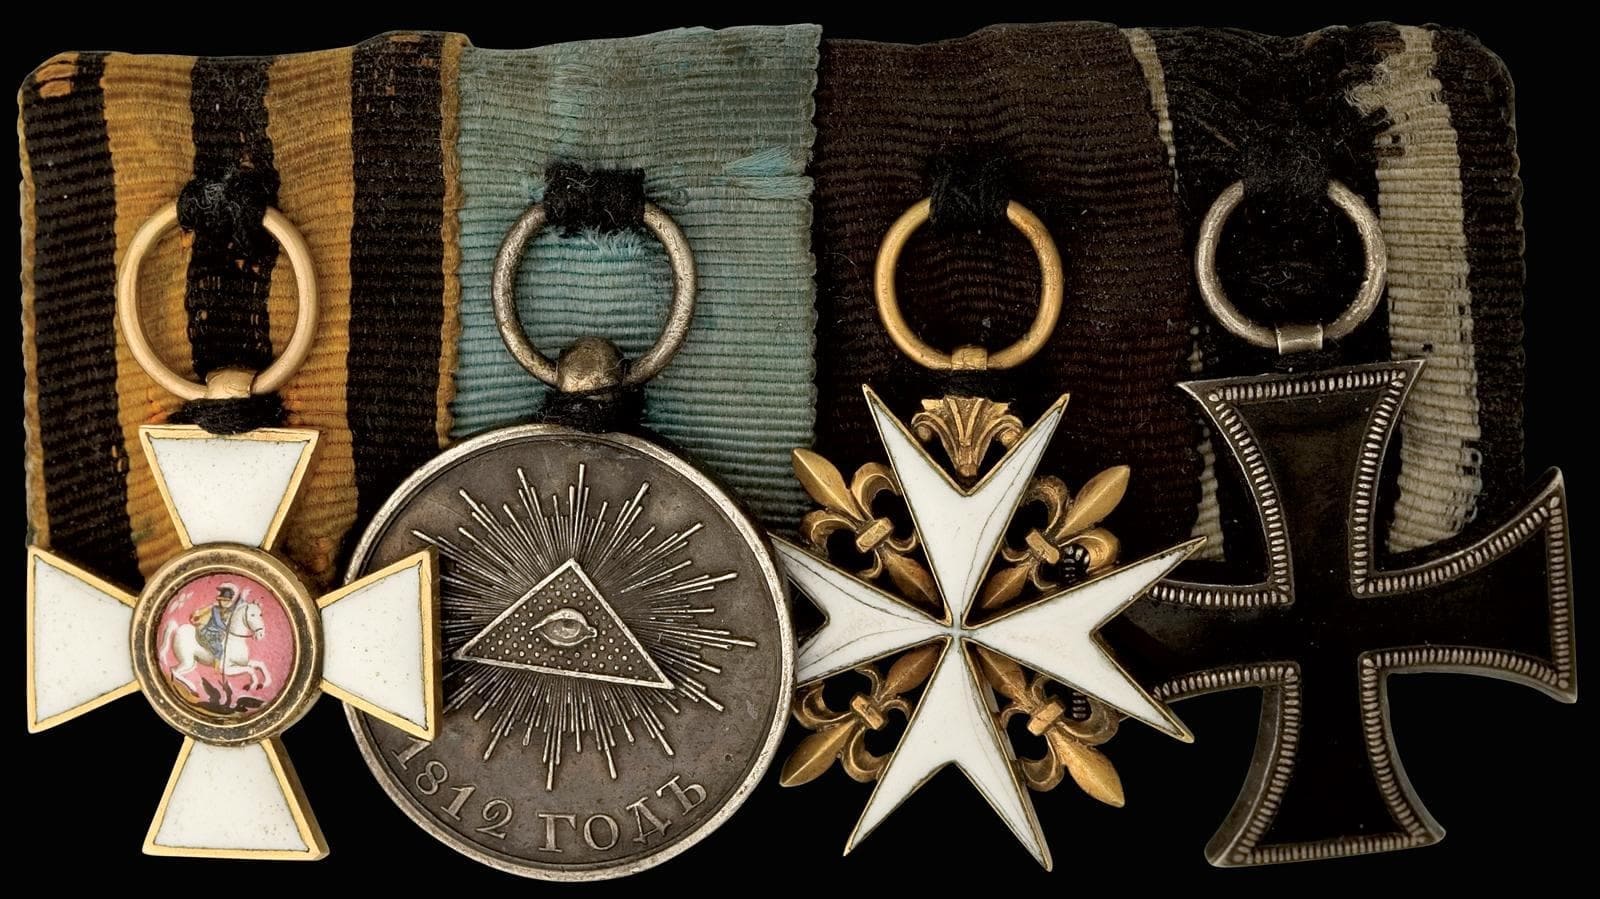 Imperial Ryssian Medal bar with Kulm Cross.jpg